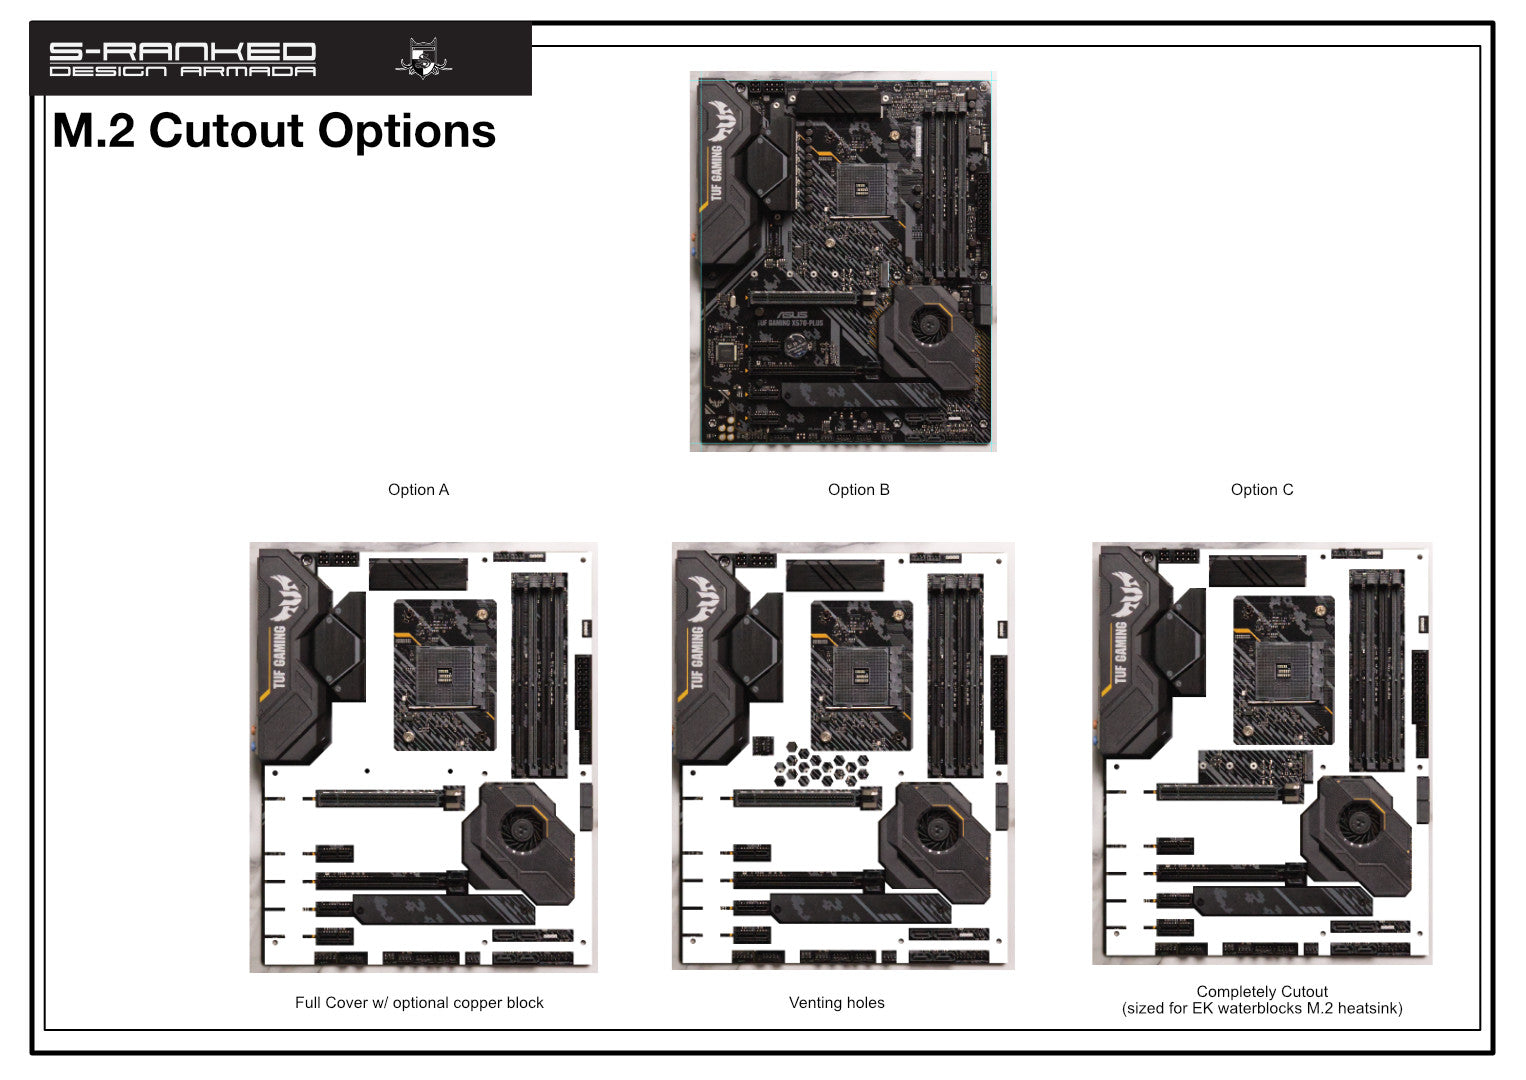 M.2 Cutout options